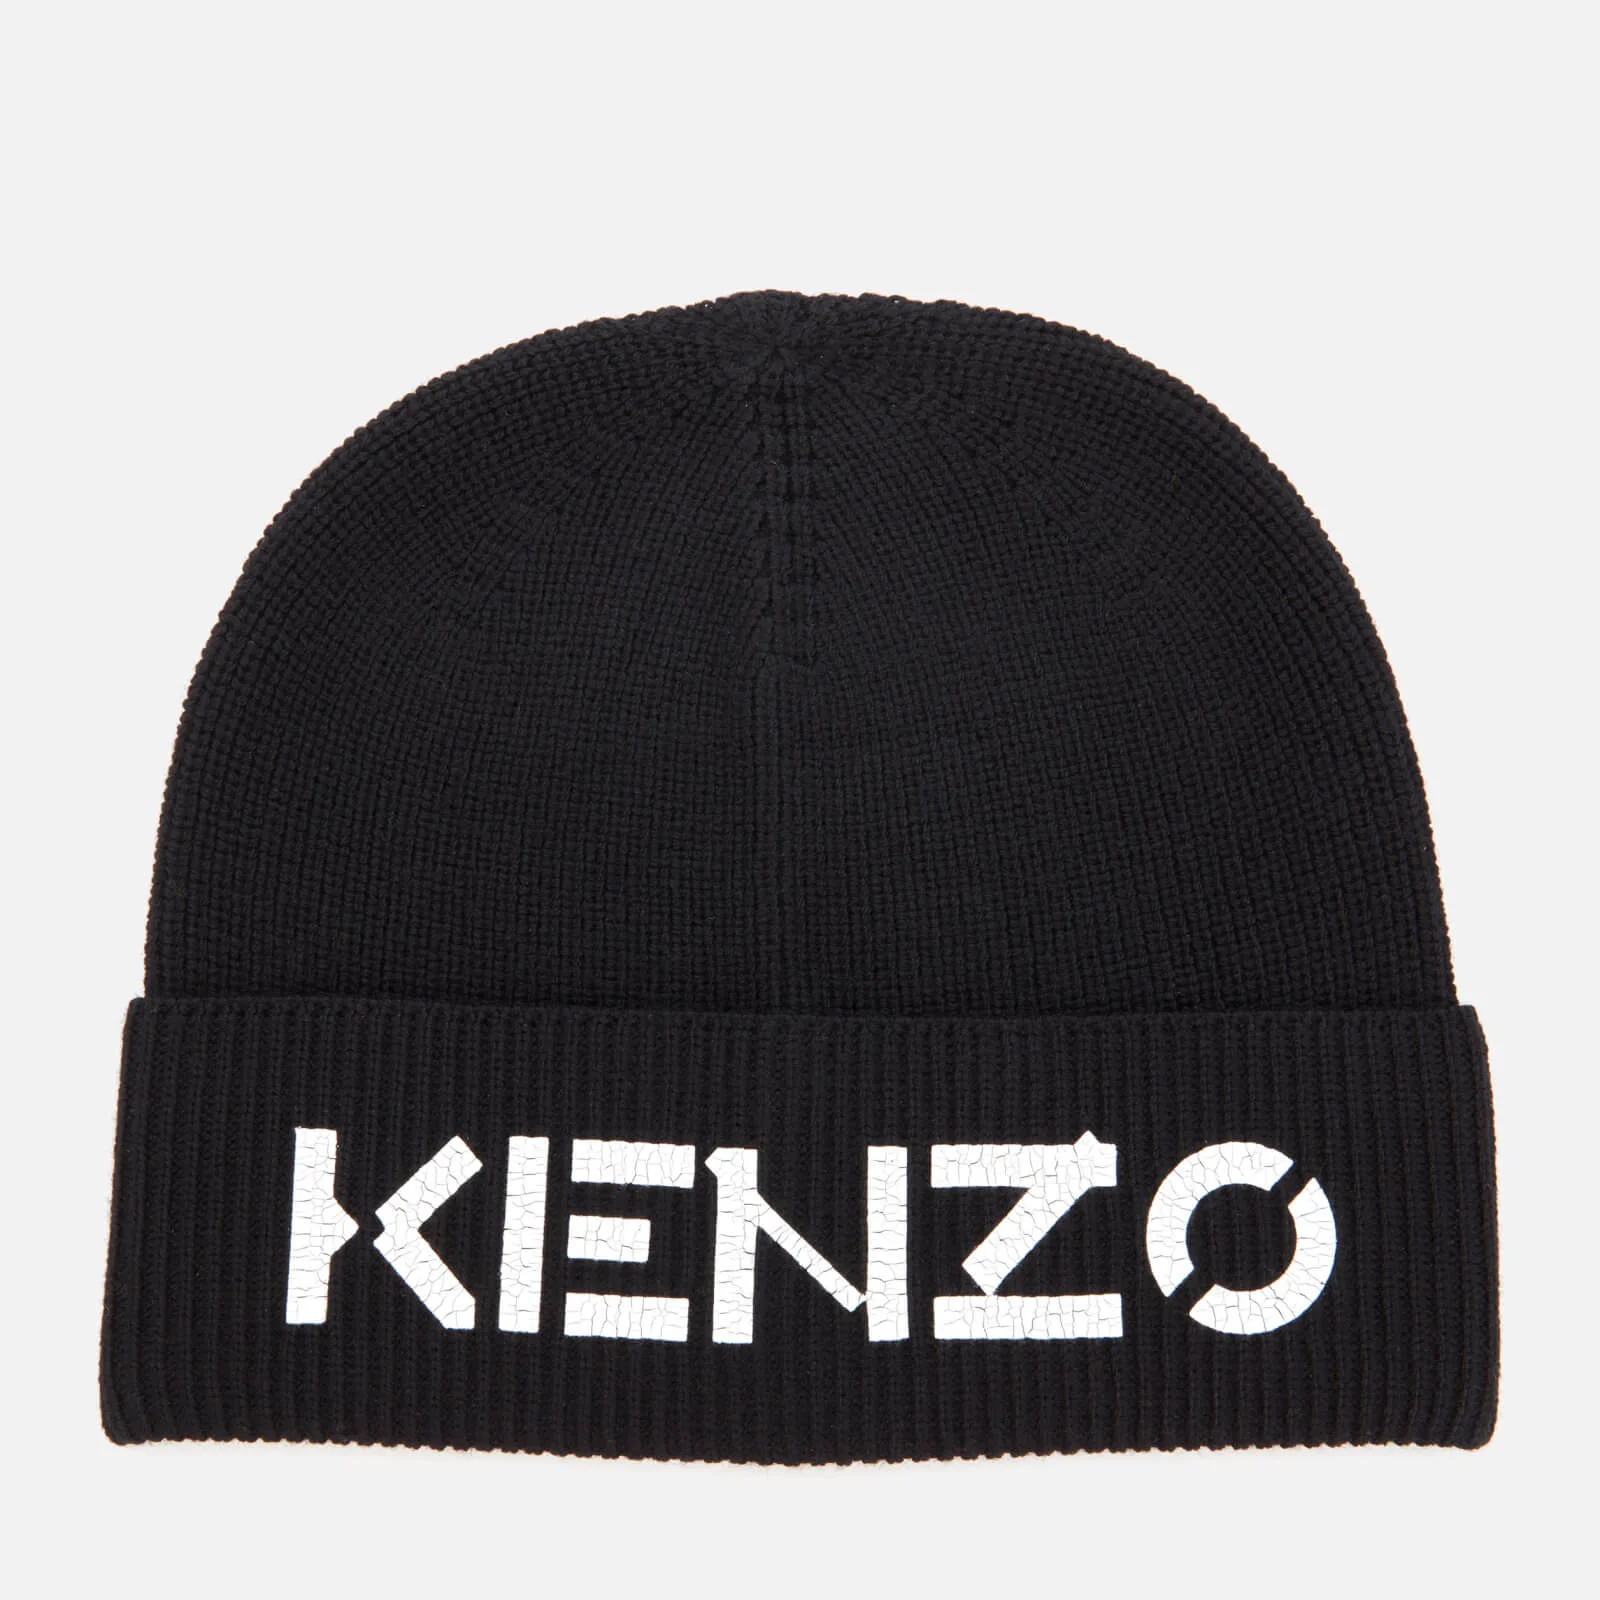 KENZO Men's Wool Beanie - Black Image 1